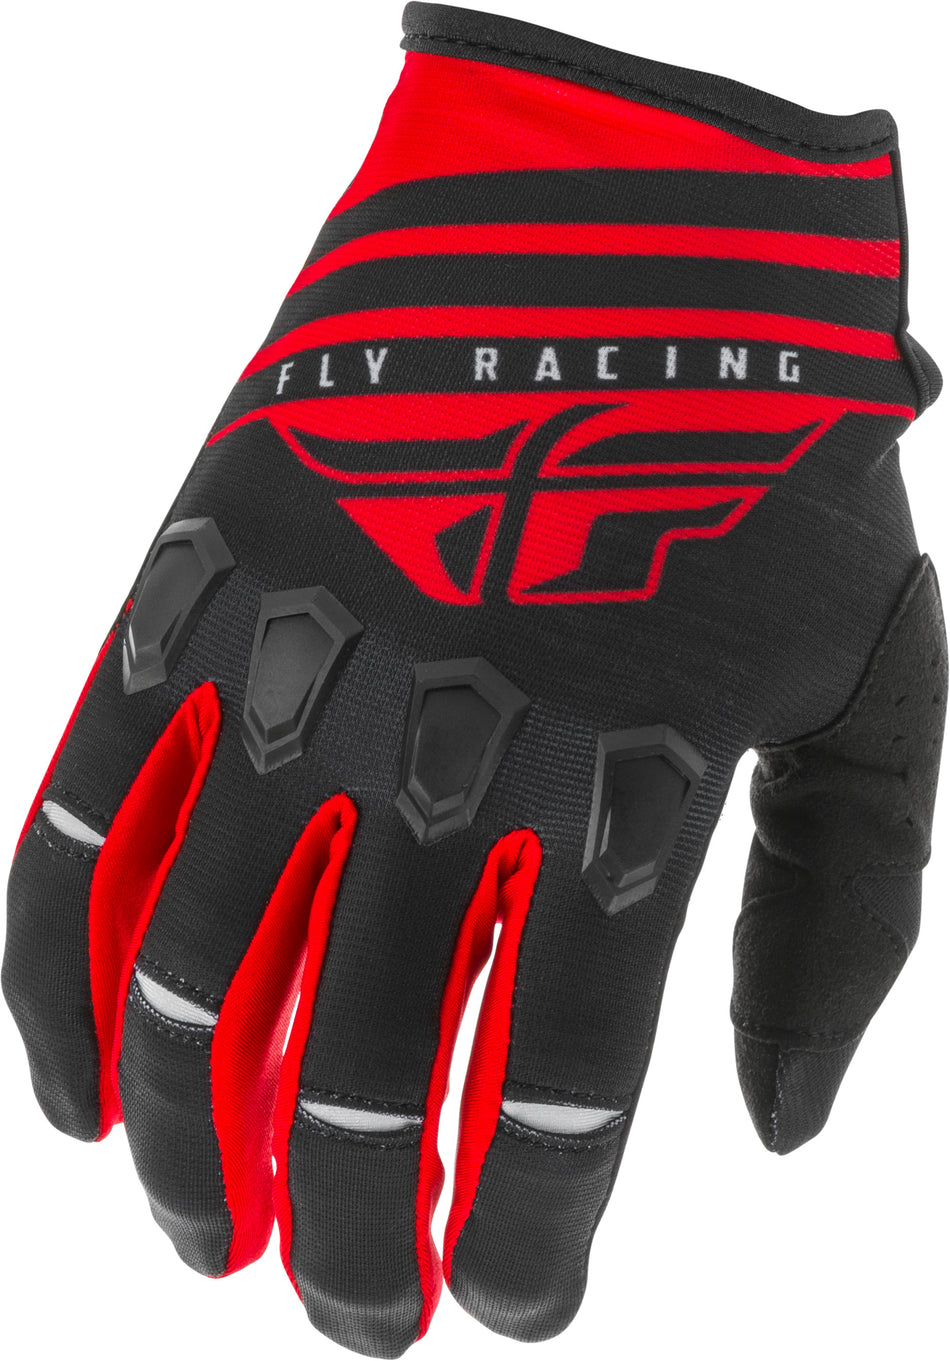 FLY RACING Kinetic K220 Gloves Red/Black/White Sz 09 373-51309